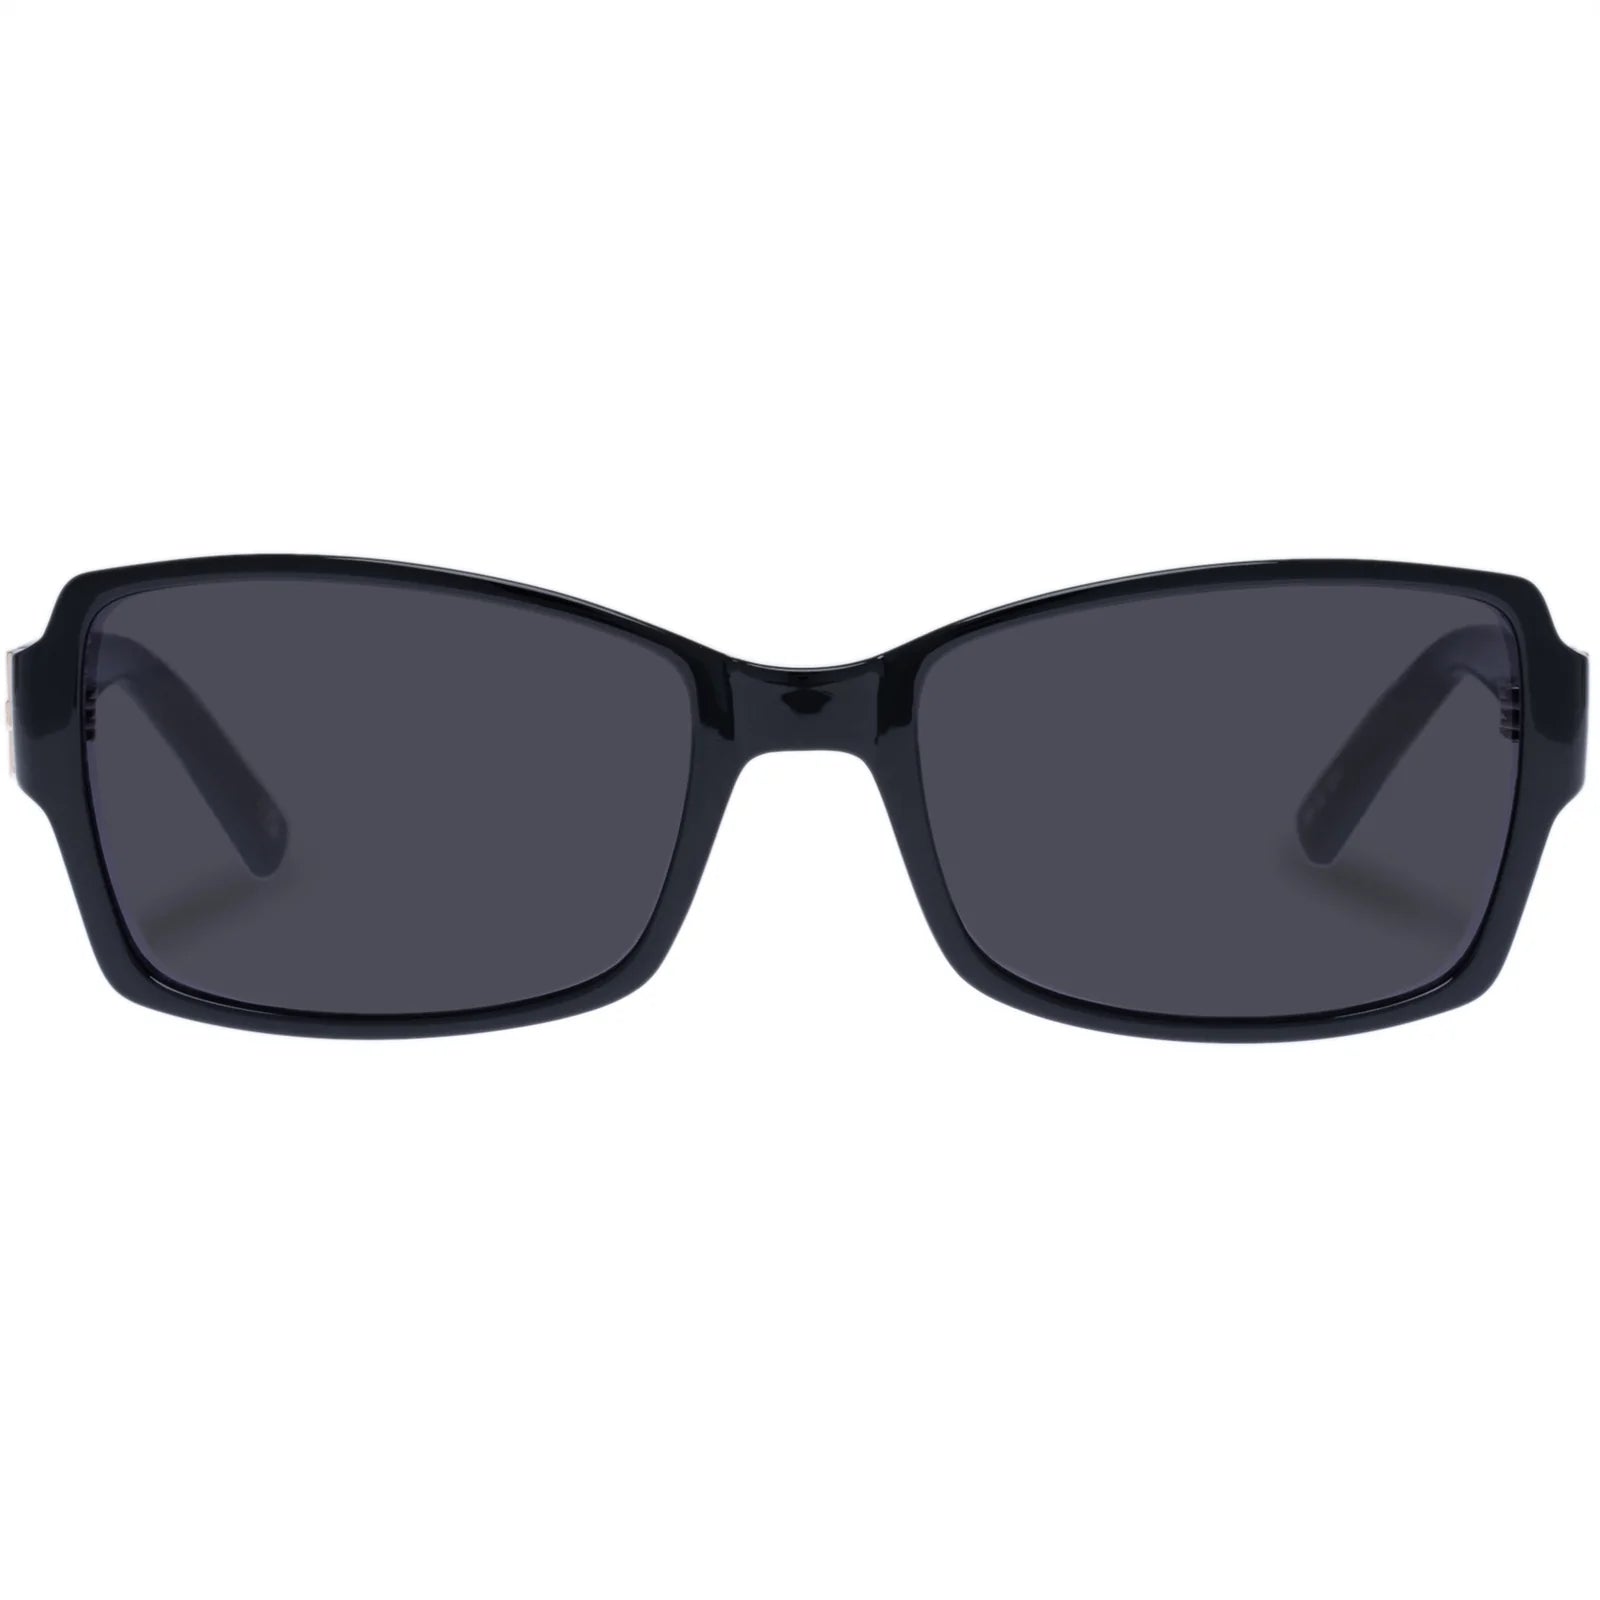 Le Specs Sunglasses - Trance - Black